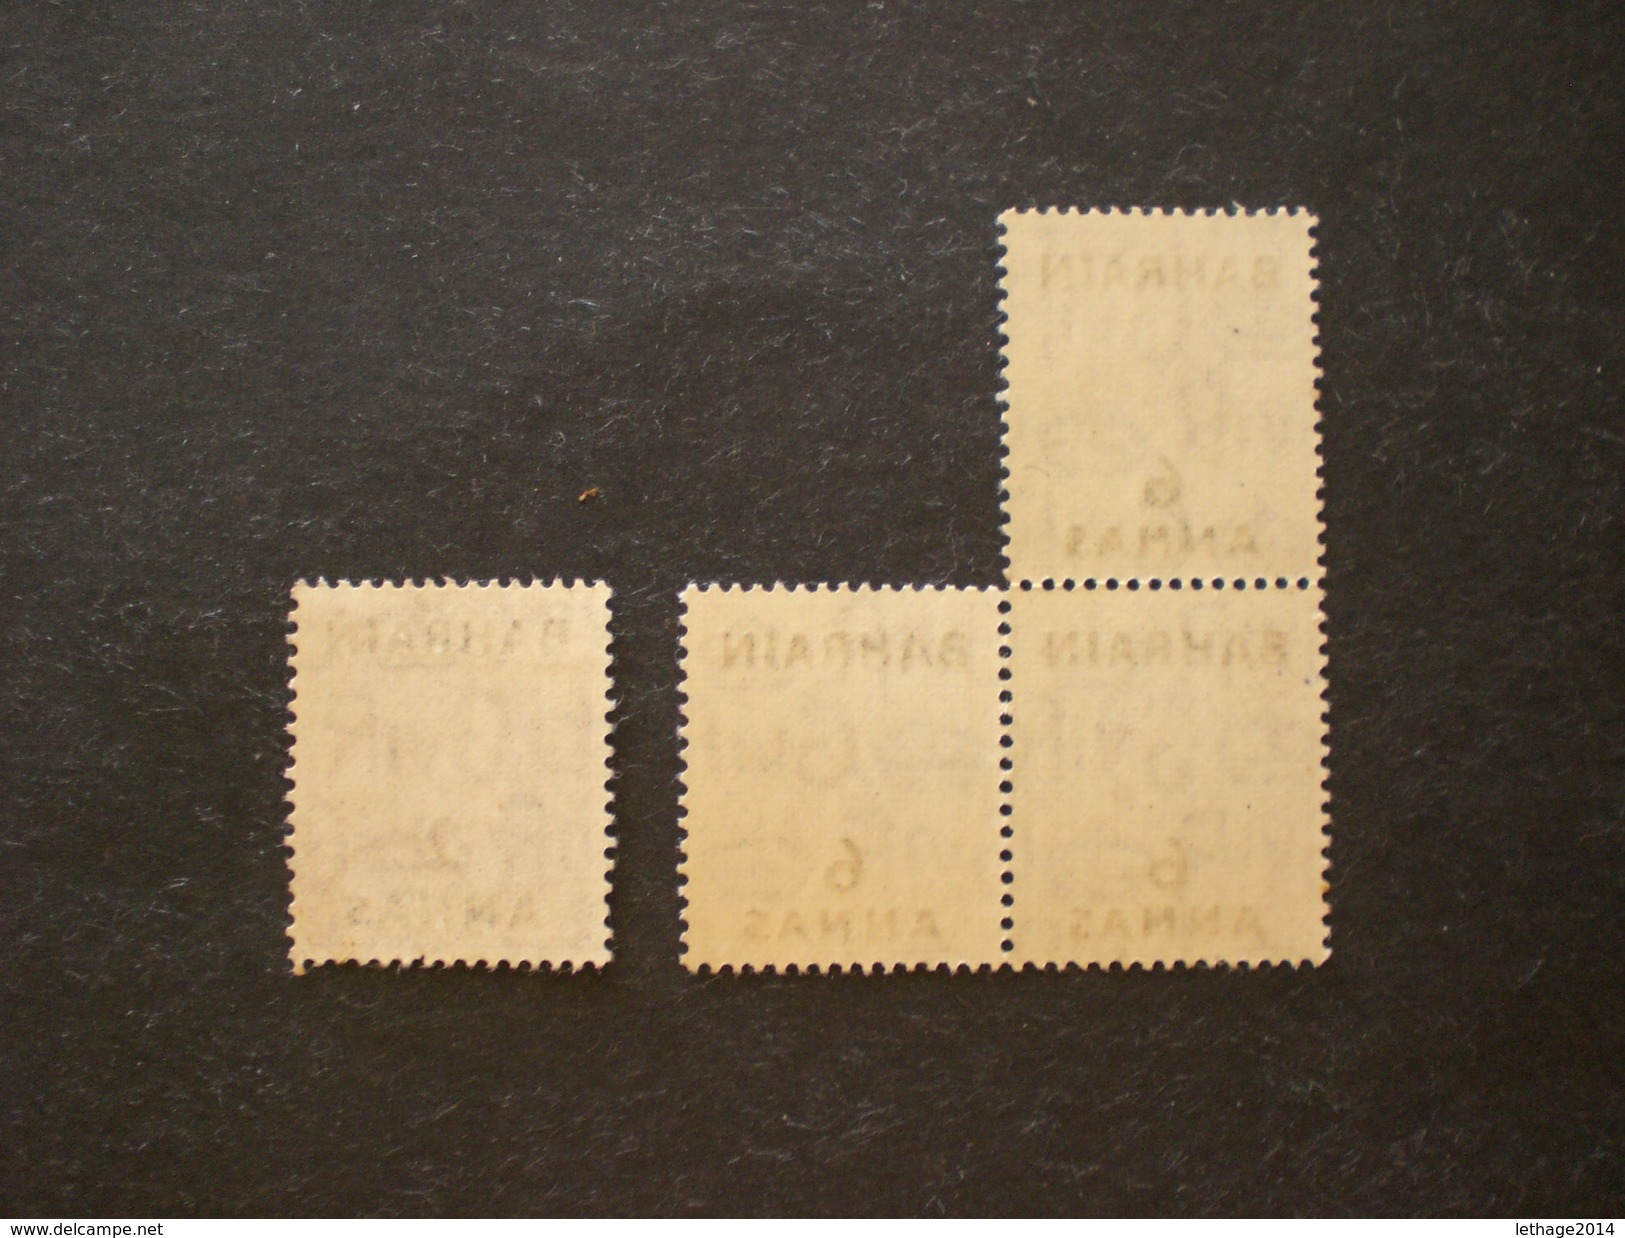 &#x627;&#x644;&#x628;&#x62D;&#x631;&#x64A;&#x646; BAHRAIN 1948 Great Britain Postage Stamps Overprinted "BAHRIAN"  MNH - Bahrain (...-1965)